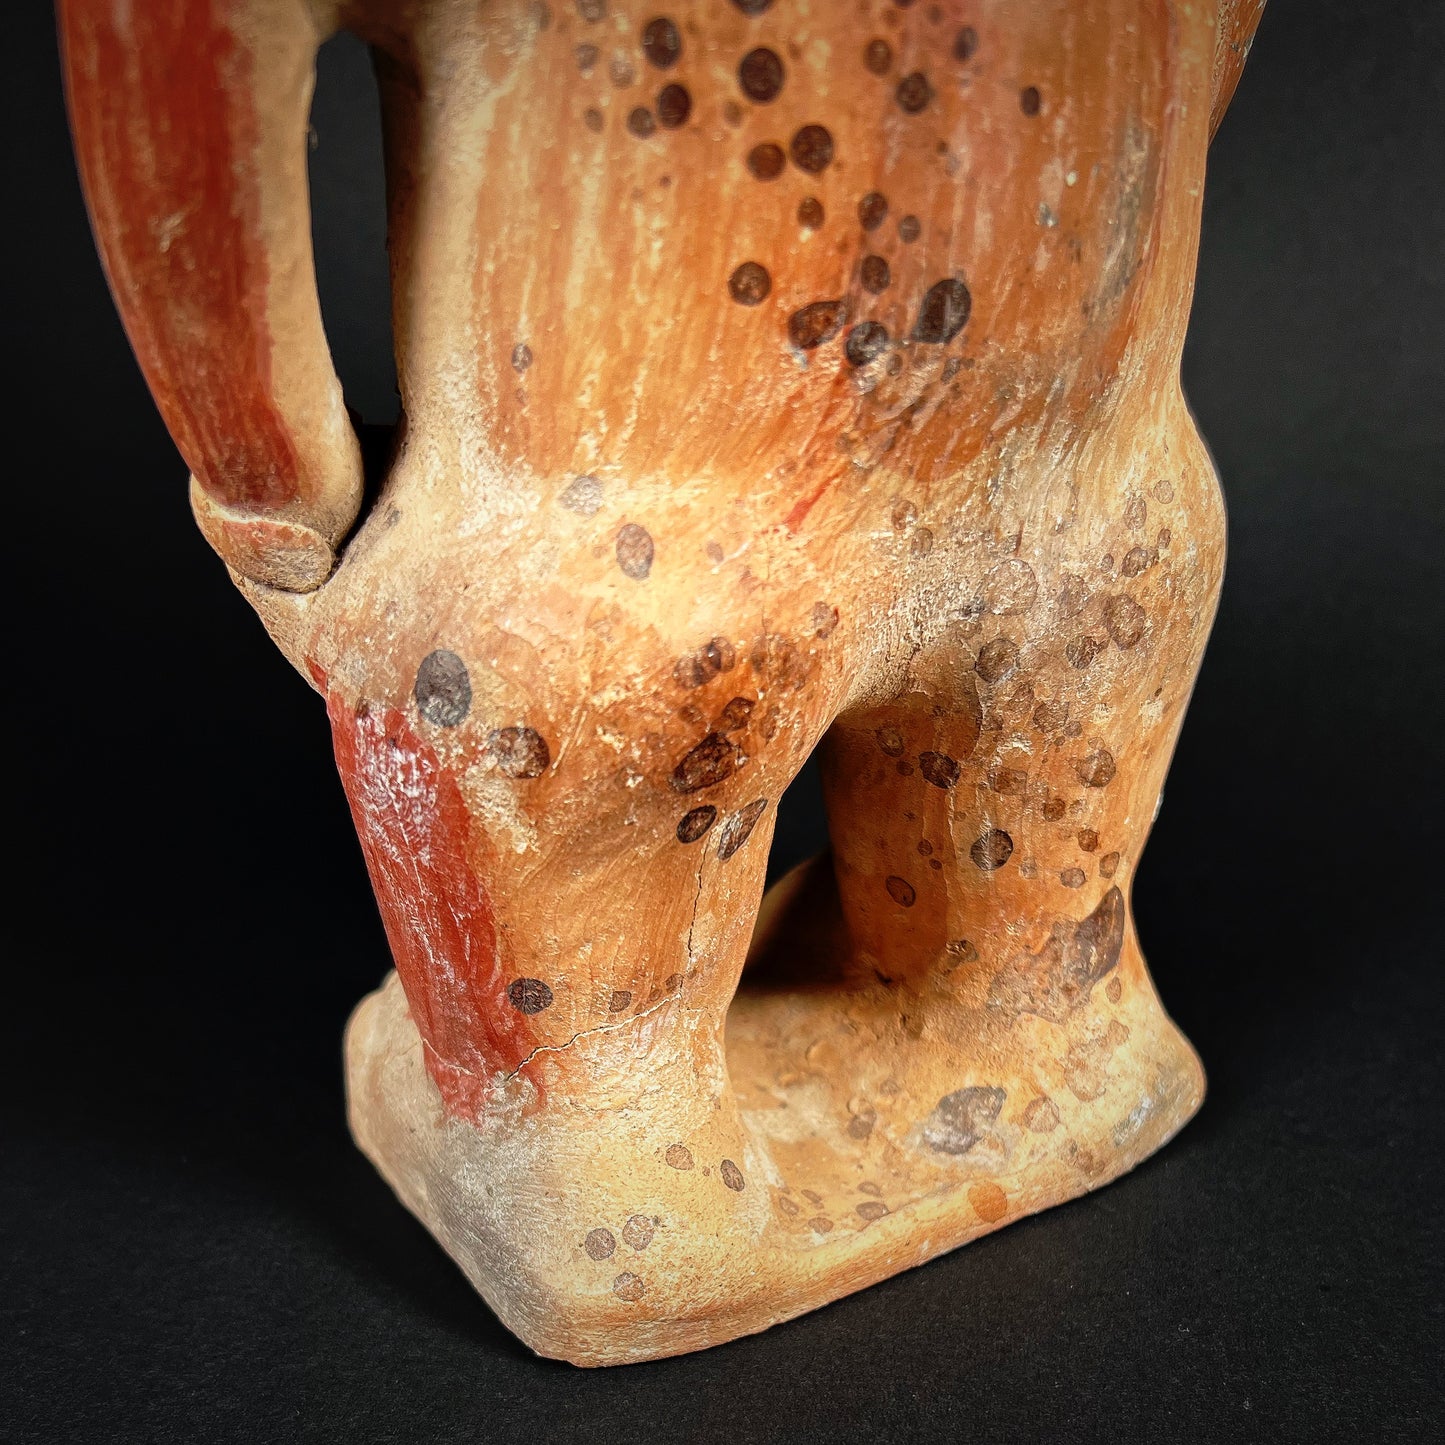 Manteño-Huancavilca Standing Male Terracotta Incensario